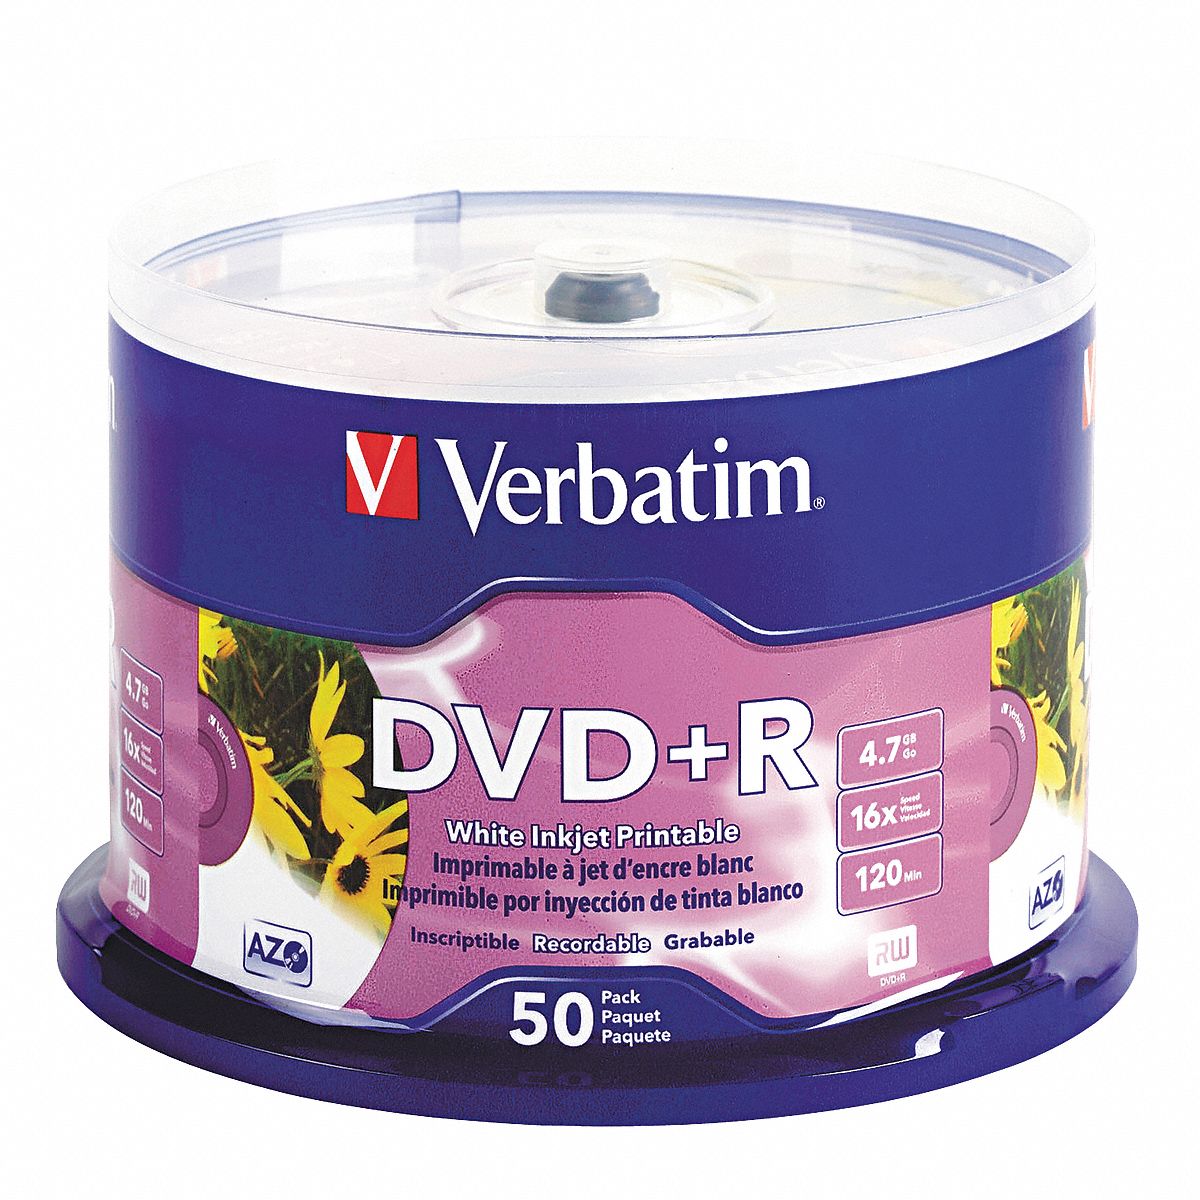 verbatim-dvd-r-disc-4-7-gb-capacity-16x-speed-14f855-ver95136